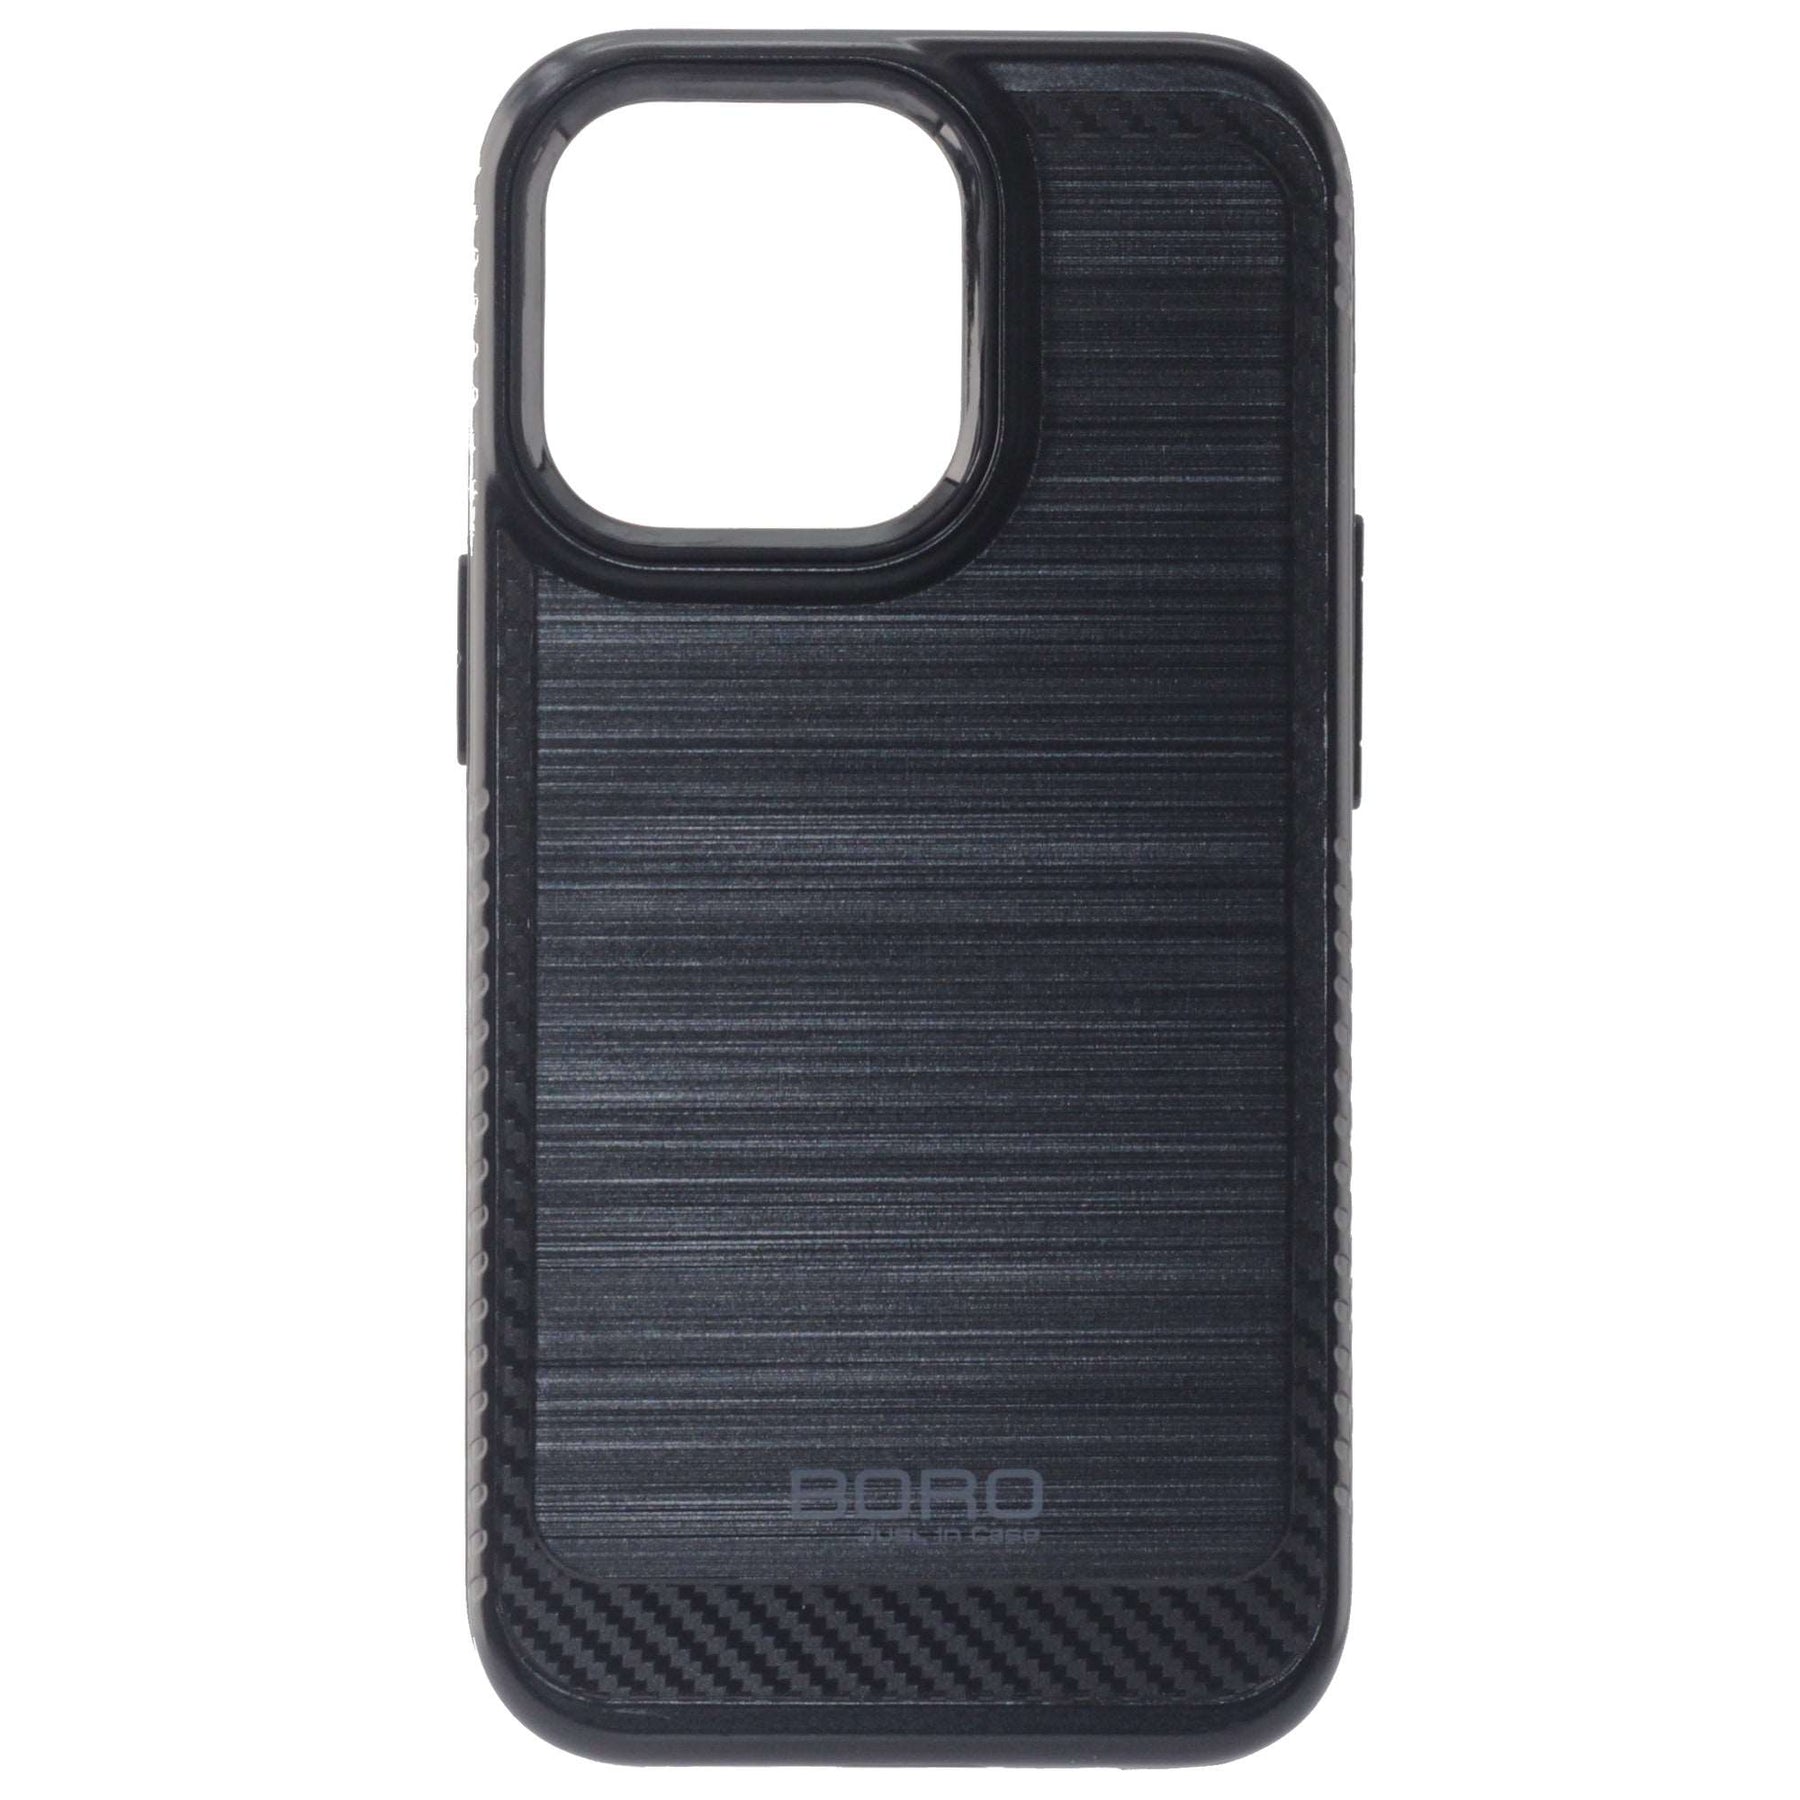 BORO Case For Apple iPhone 11, Slim Armor Case, Color Black